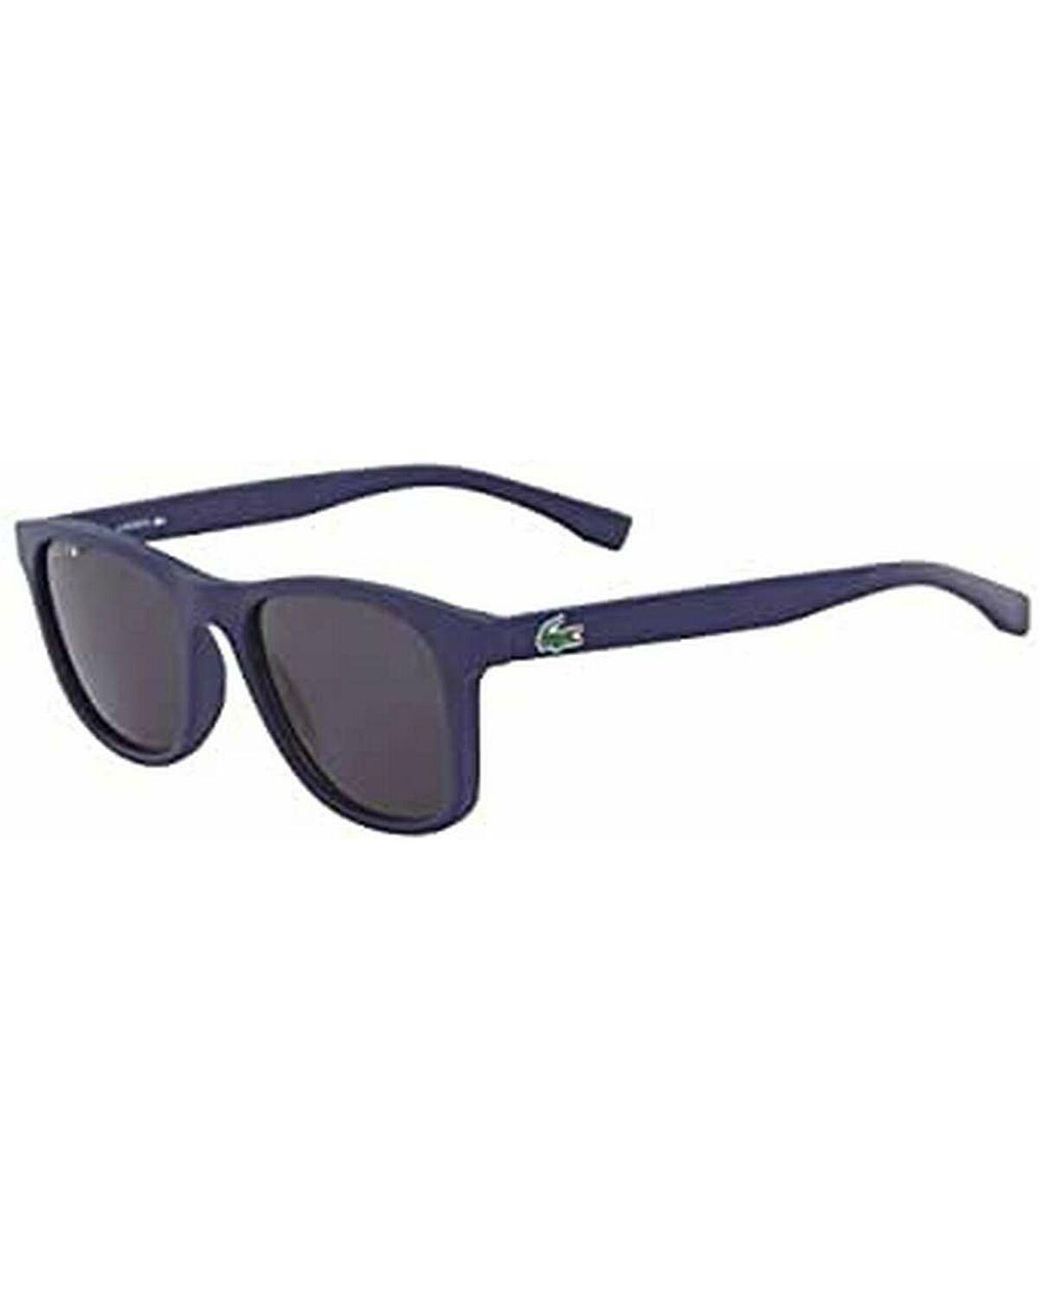 Lacoste Blue Square Mens Sunglasses L910S 54 17 145